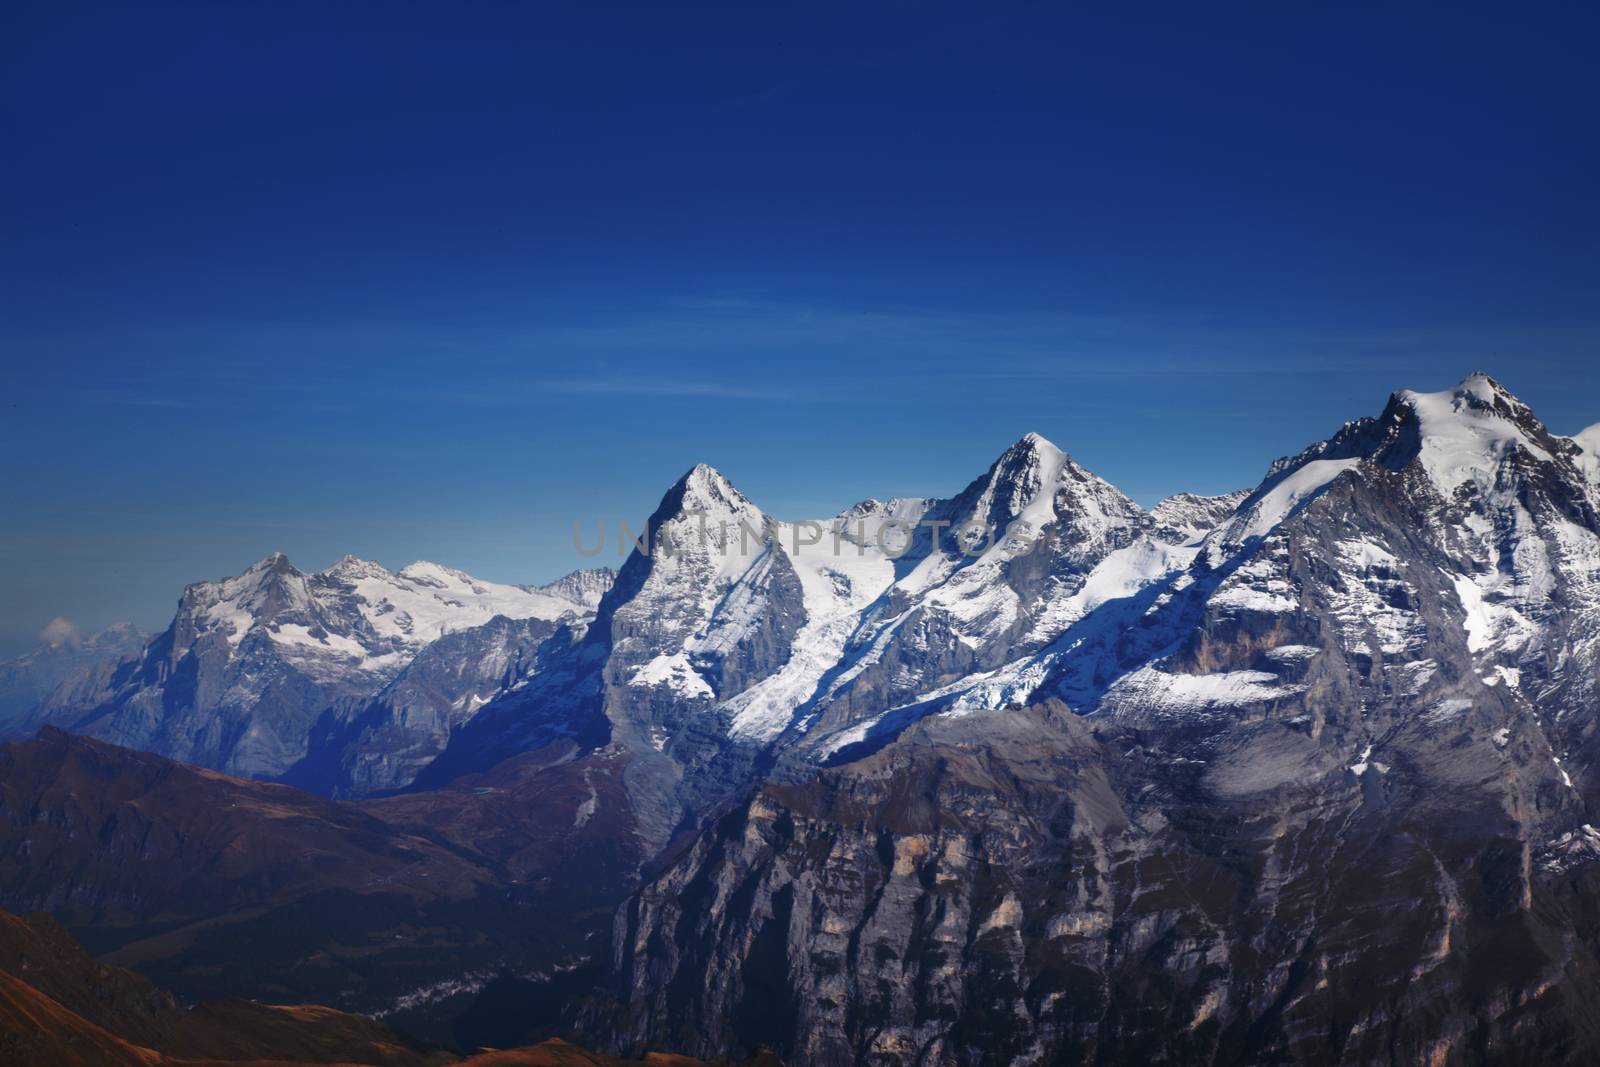 Eiger, Moench and Junfrau - three famous Swiss mountains by PeterHofstetter